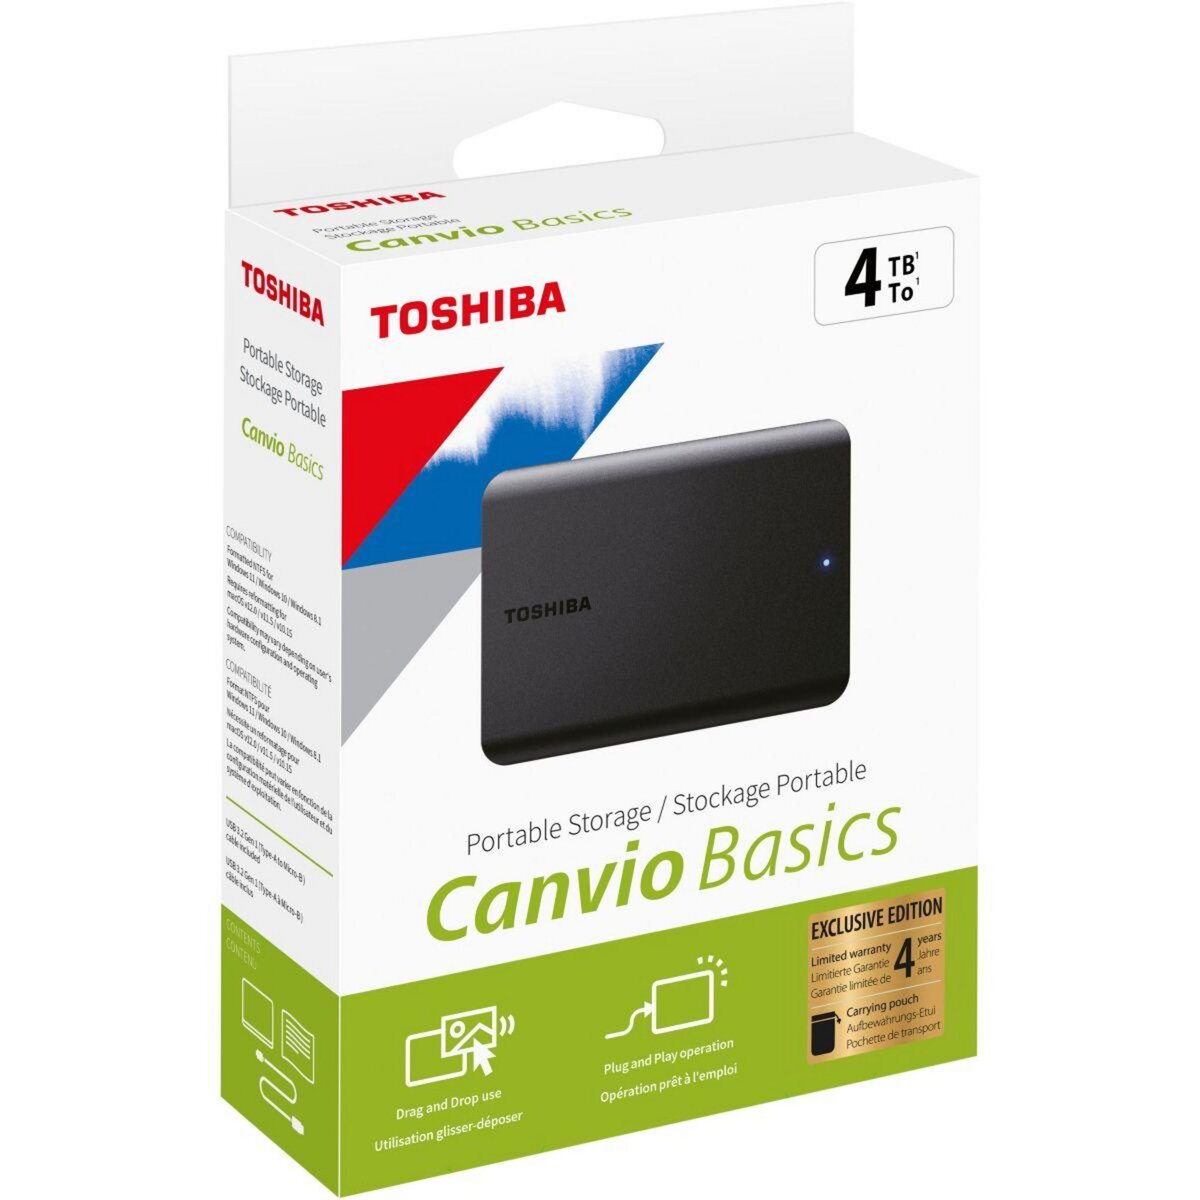 Toshiba Disque dur externe Pack 4To canvio basics + Housse